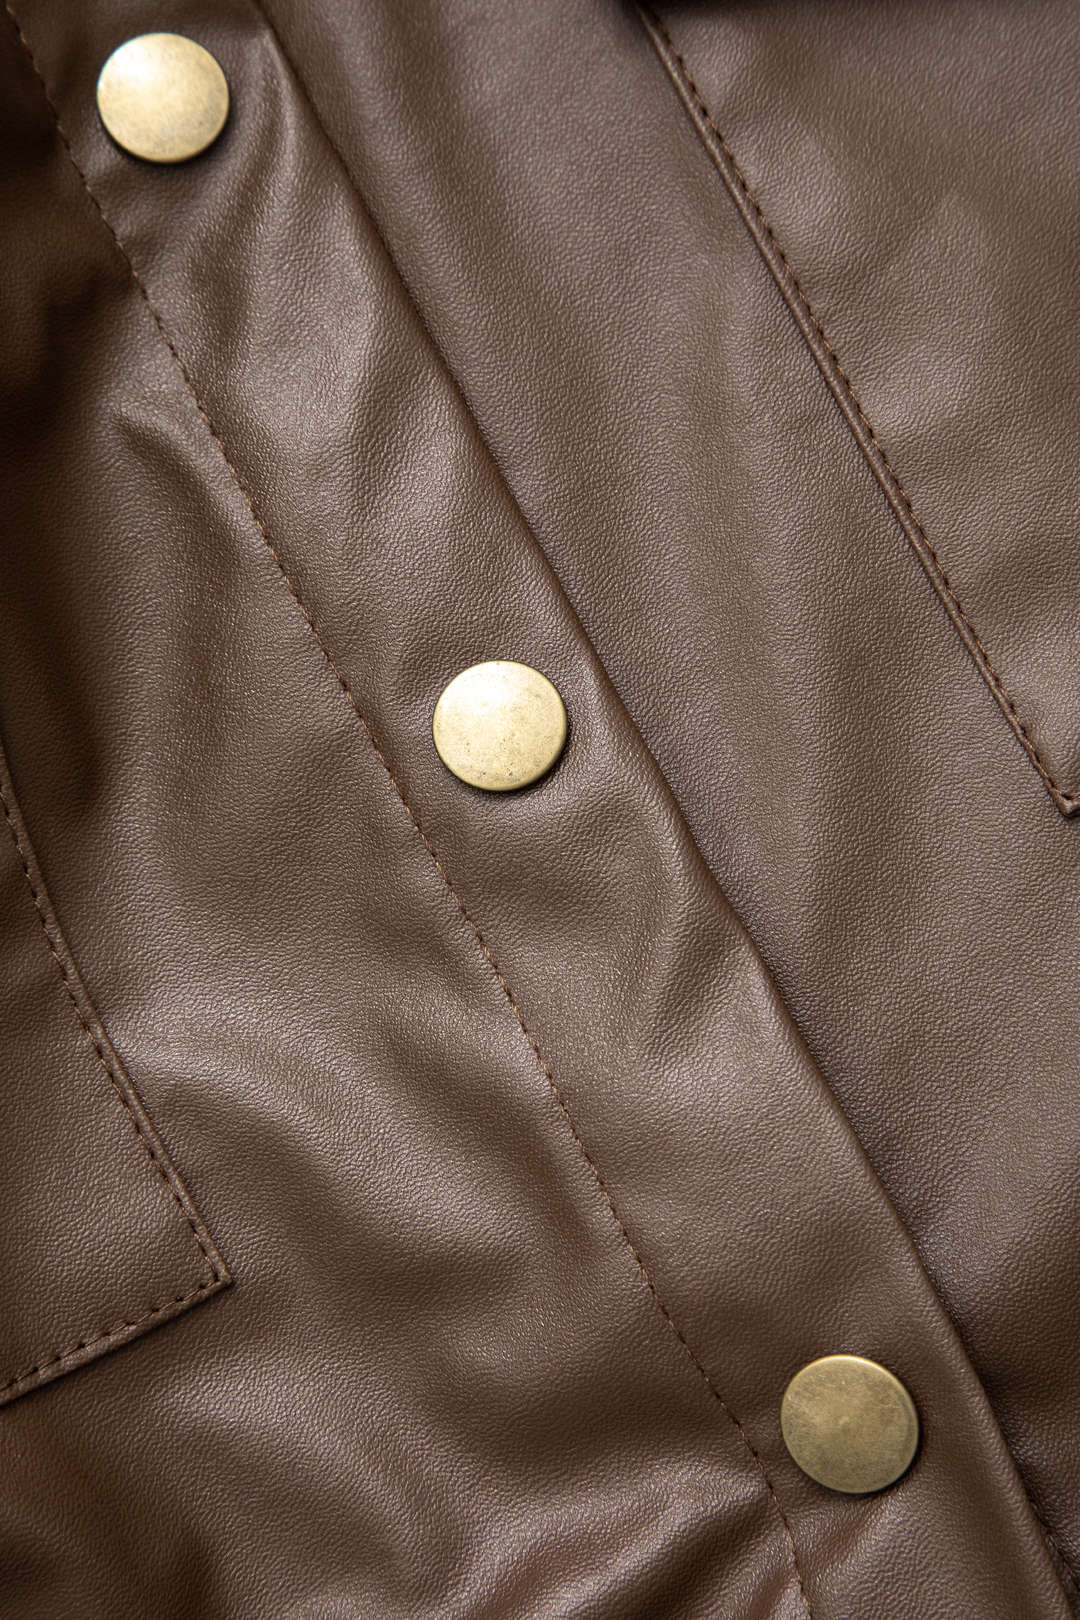 Faux Leather Tie Button Up Flap Pocket Jacket And Elastic Pants Set